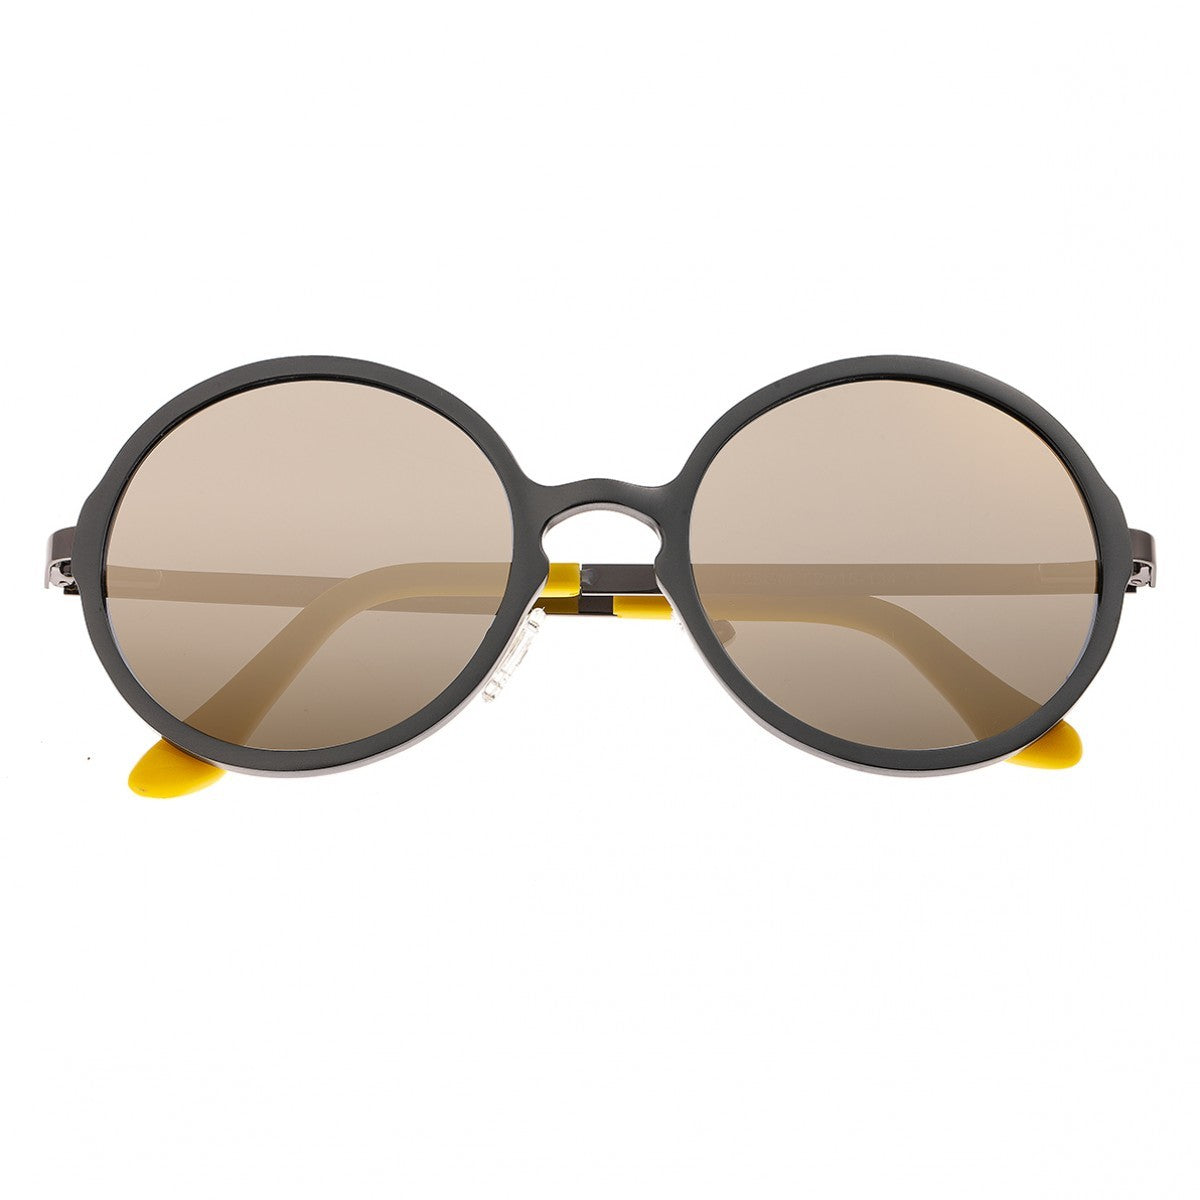 Breed Corvus Aluminium Polarized Sunglasses - Gunmetal/Gold - BSG025GM